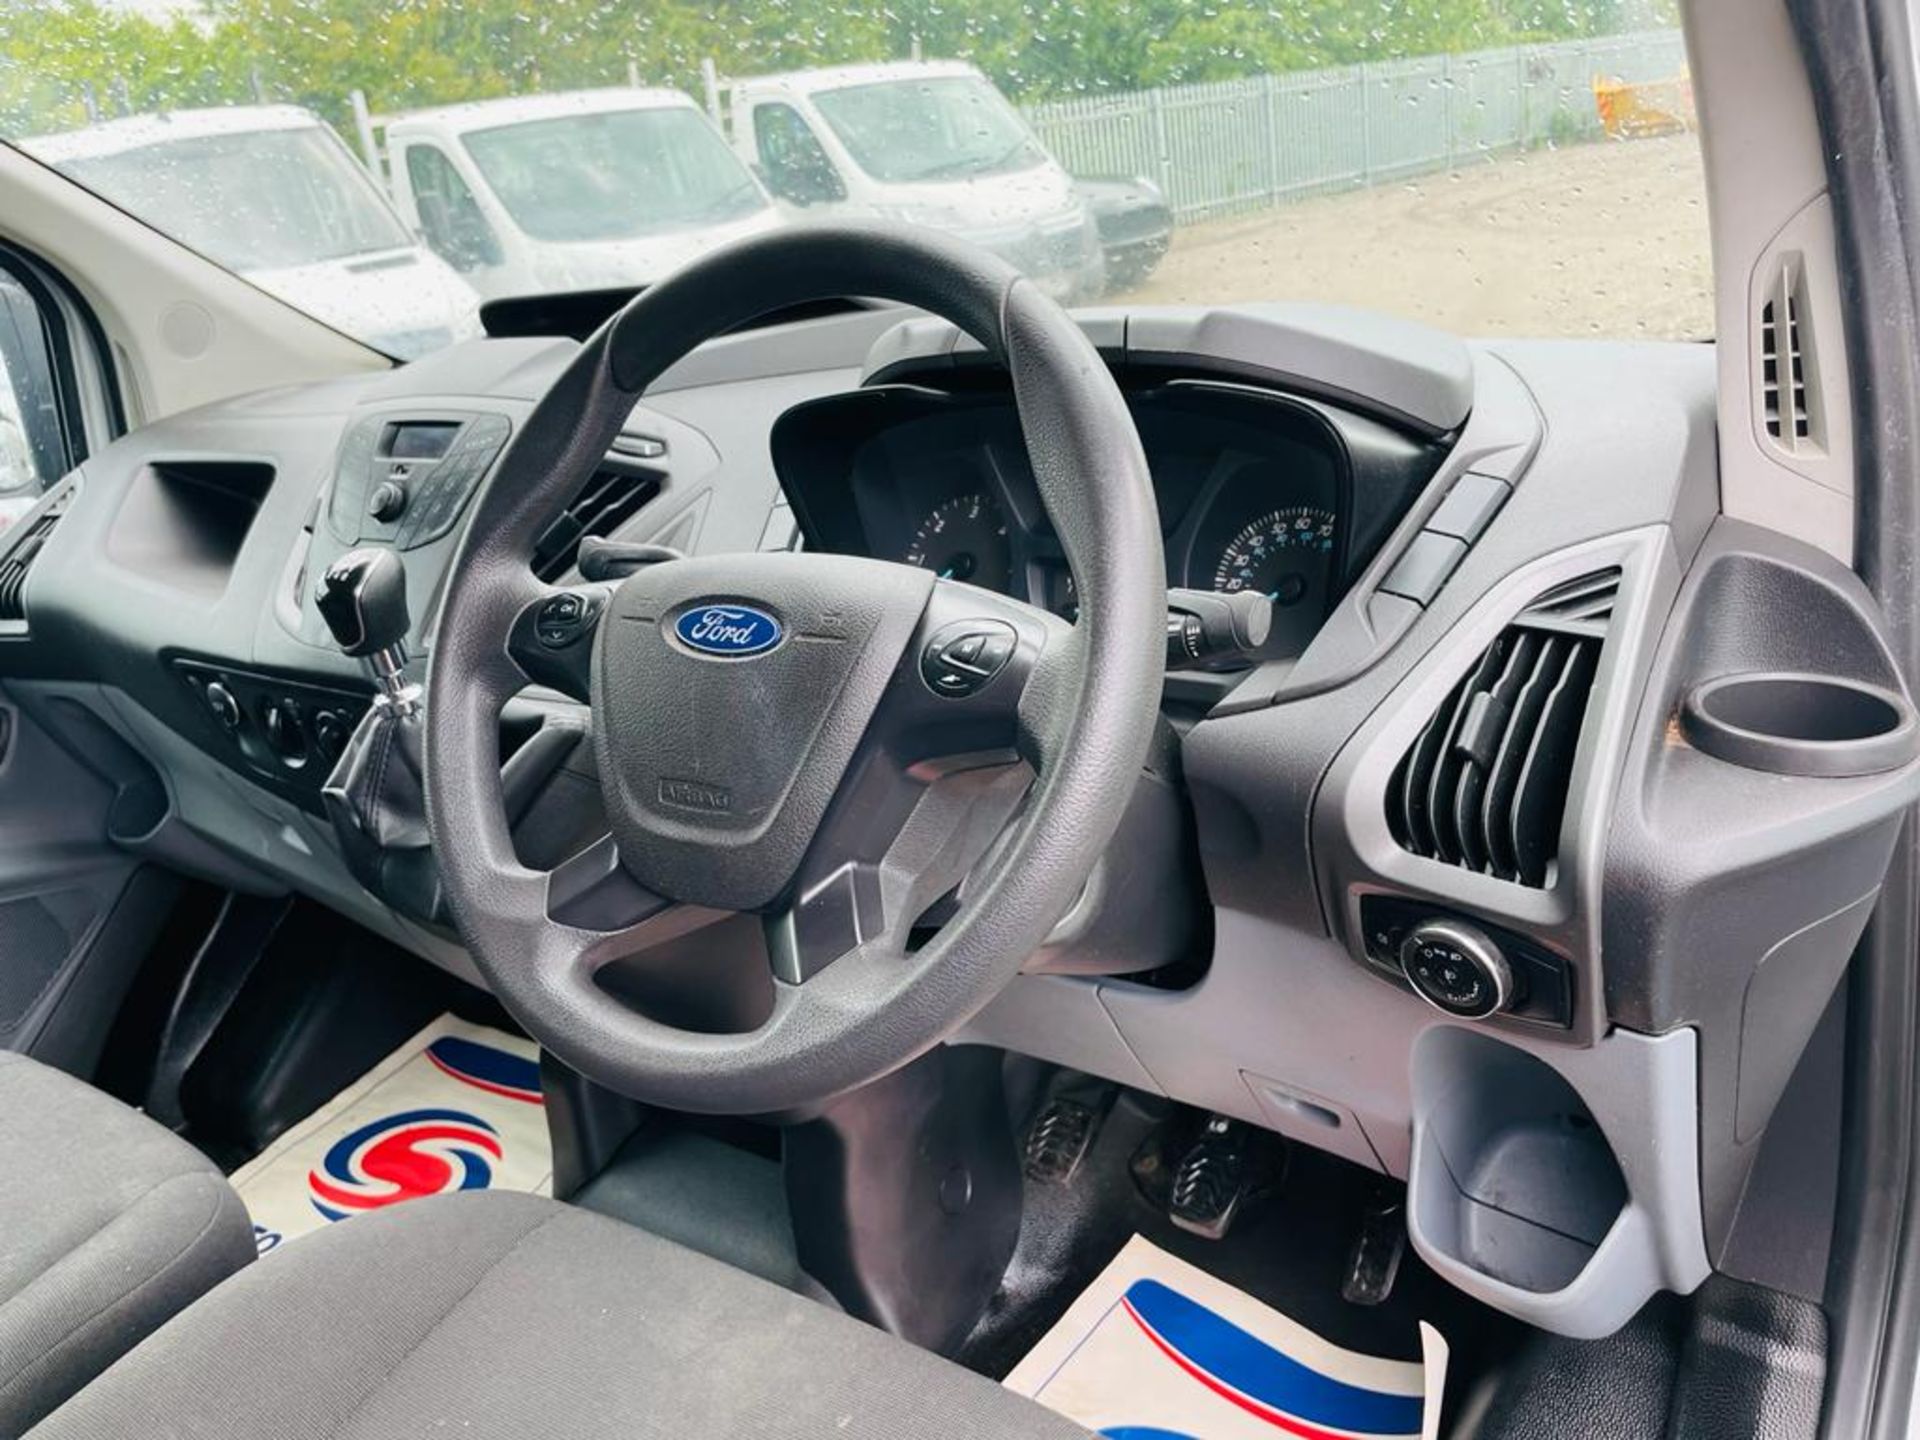 Ford Transit Custom 2.0 TDCI 105 290 L1 H1 2018 '67 Reg' - Euro 6 - ULEZ Compliant Long wheel base - Image 12 of 16